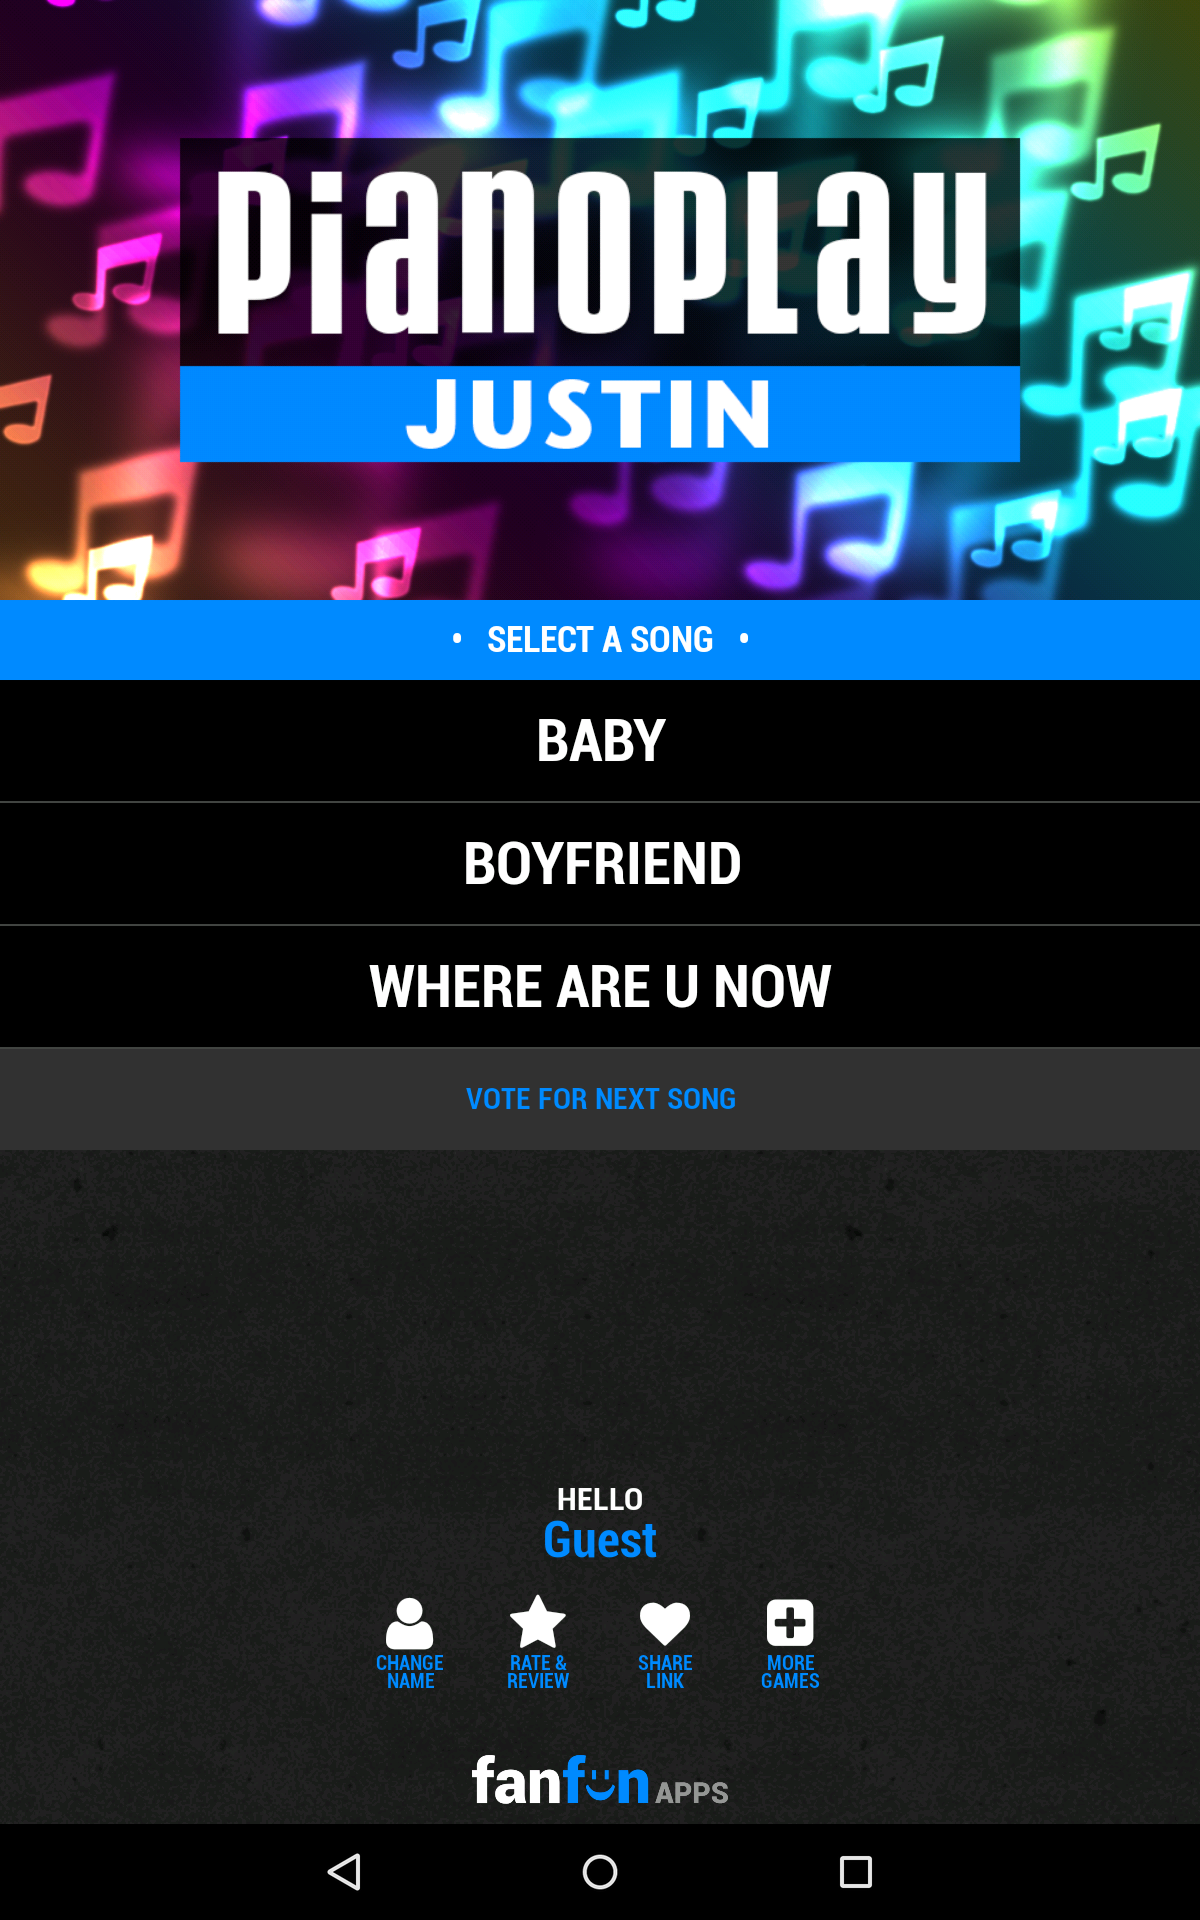 Android application PianoPlay: JUSTIN screenshort